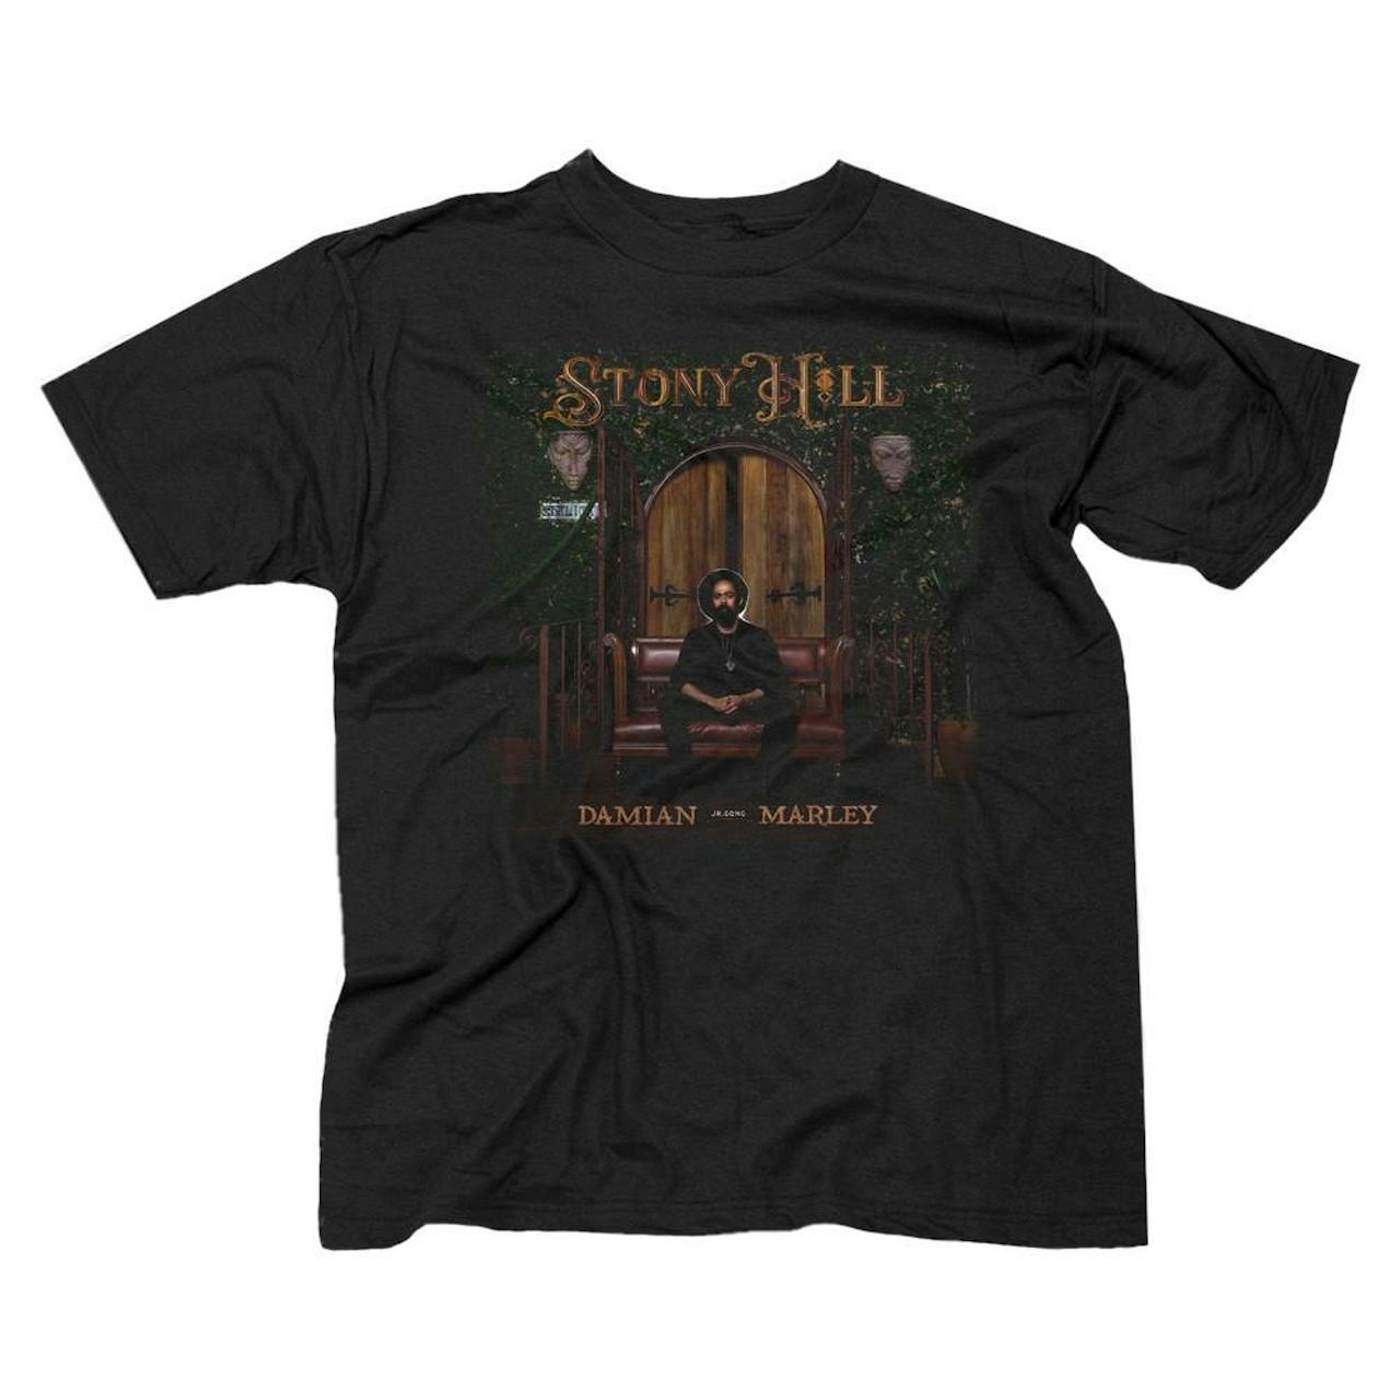 Damian Marley "Stony Hill" Tour men's t-shirt